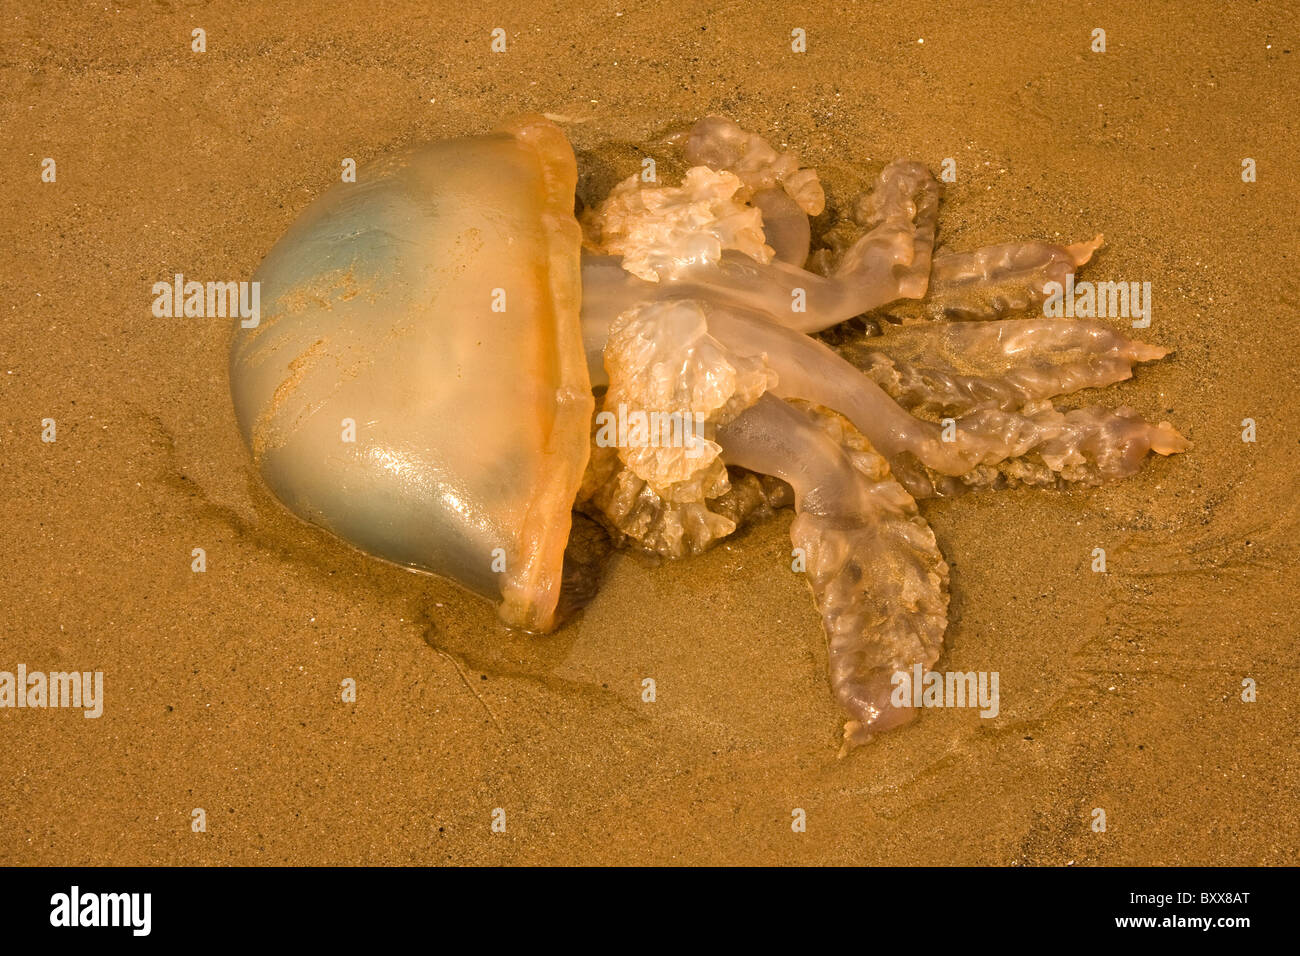 Barrel jelly fish on welsh beach Stock Photo